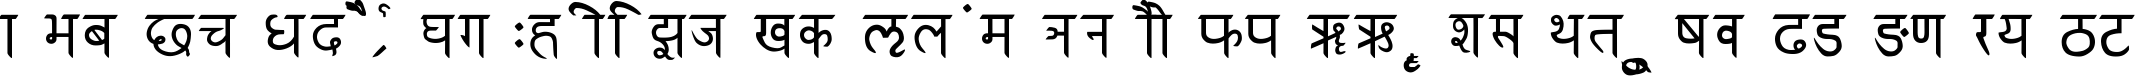 Пример написания английского алфавита шрифтом RK Sanskrit